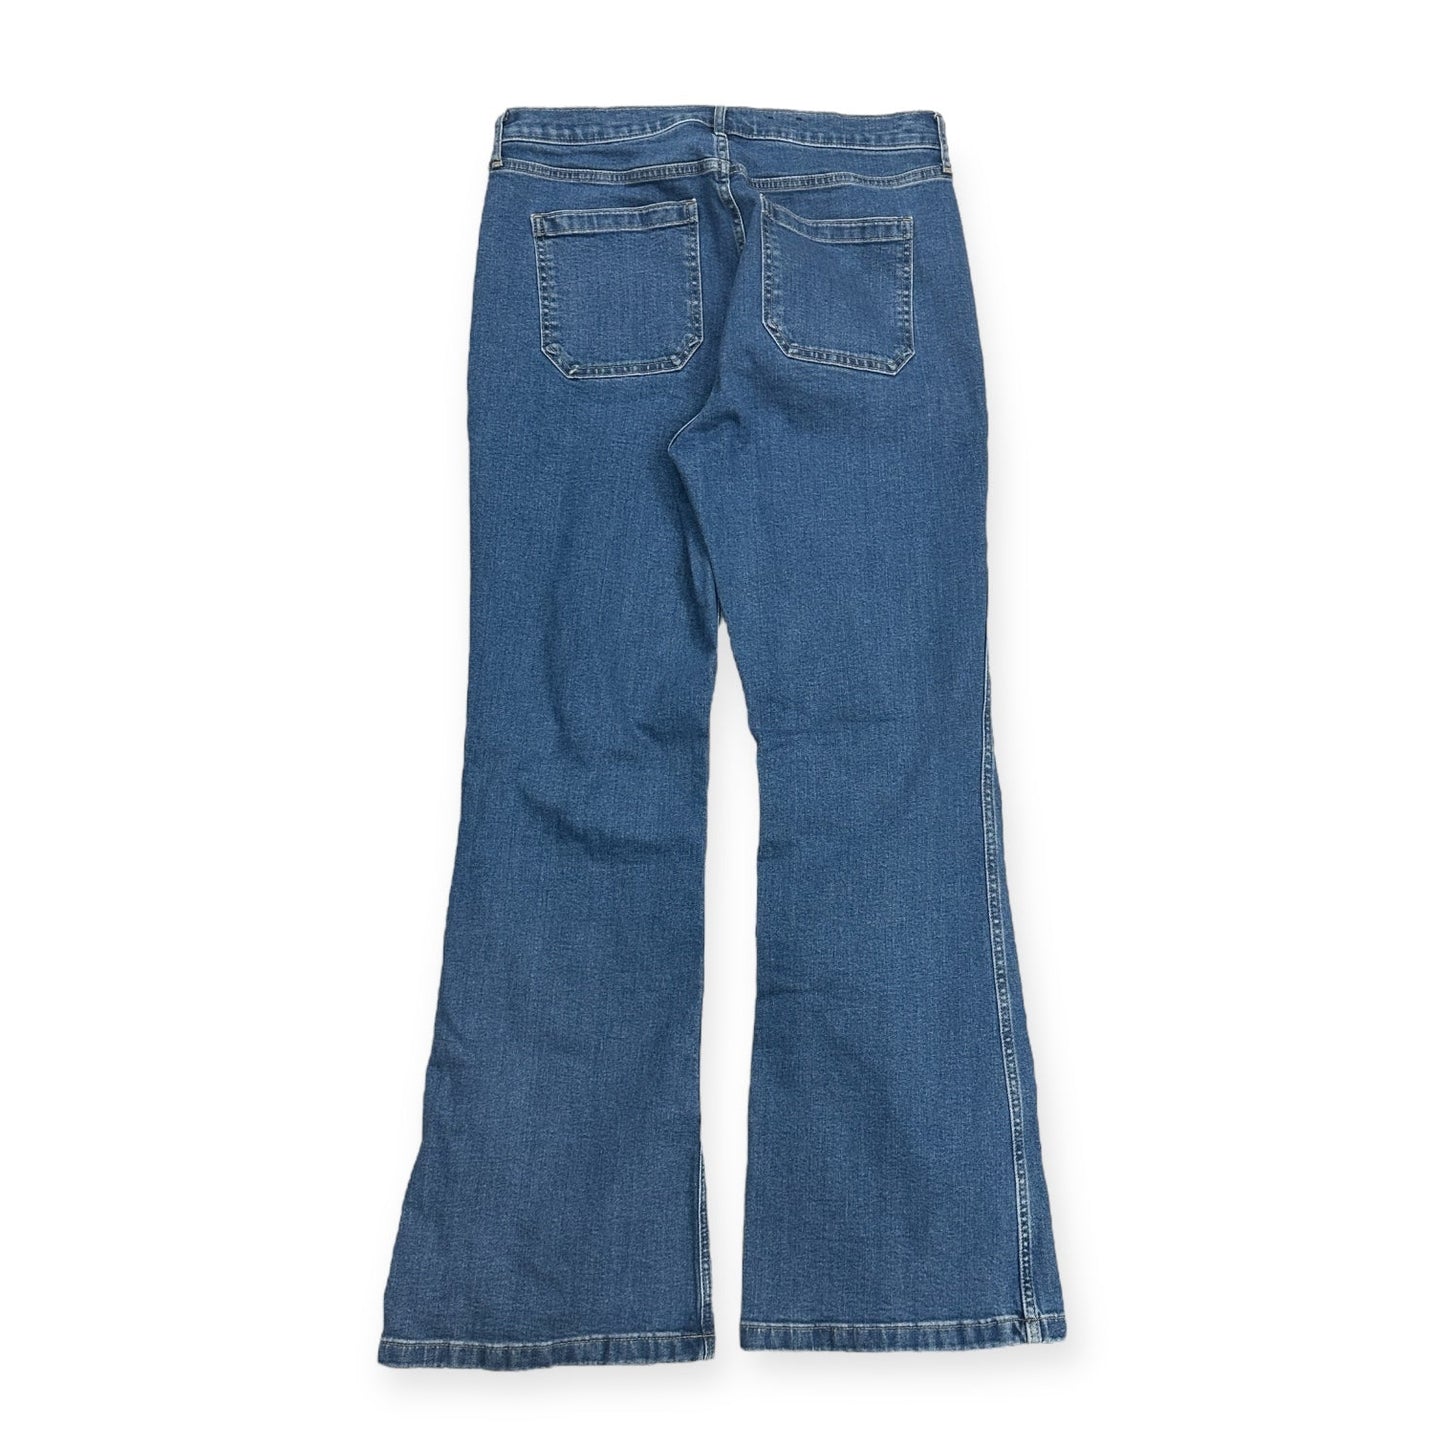 Blue Denim Jeans Flared Gap, Size 14